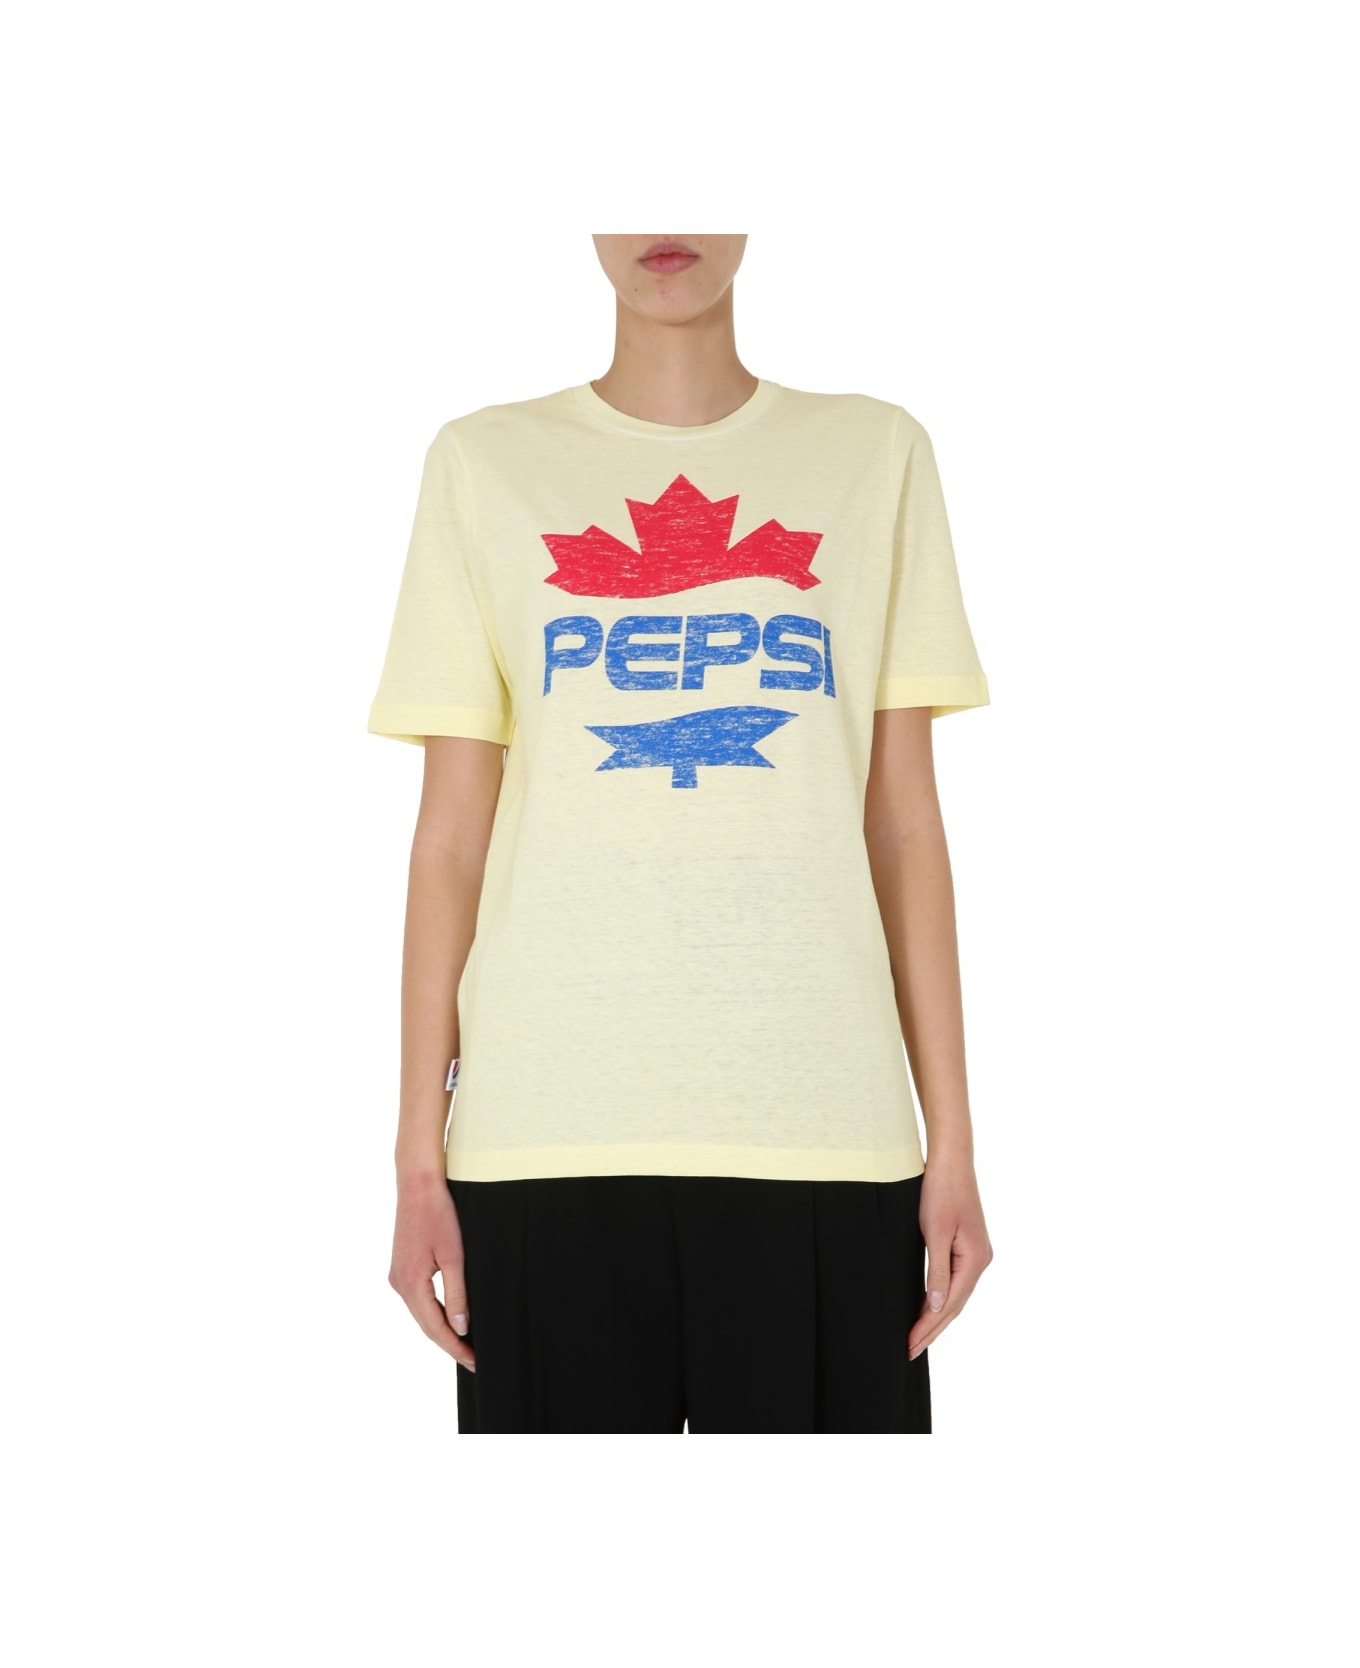 Dsquared2 "pepsi" T-shirt - YELLOW